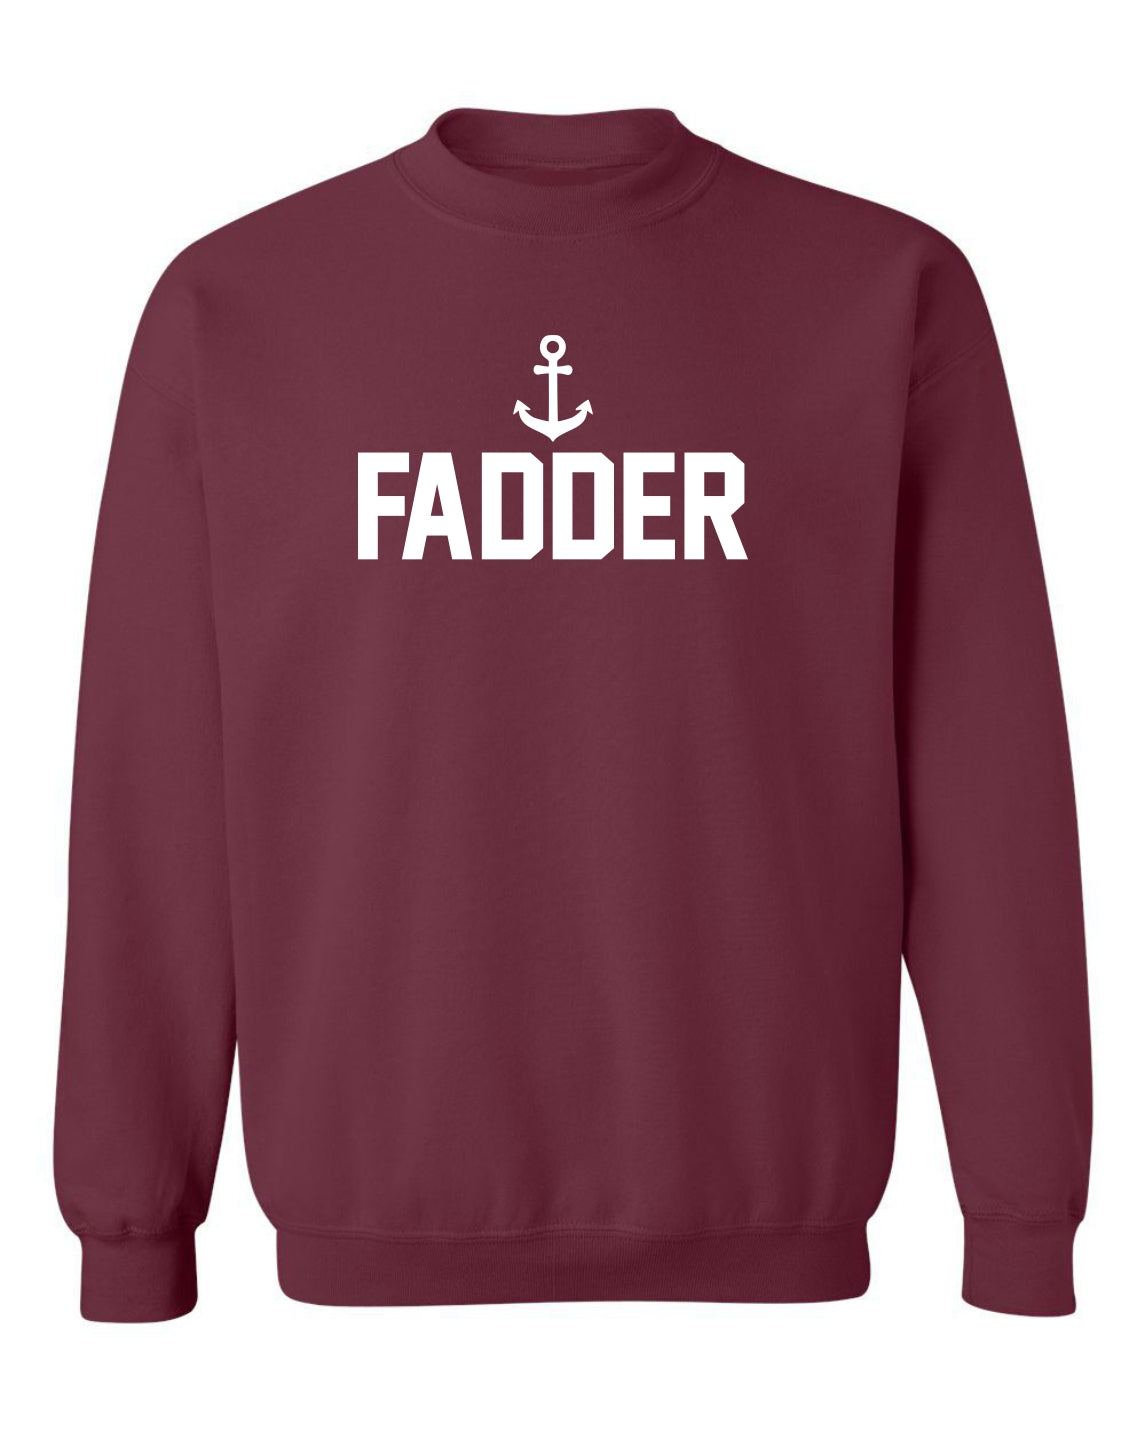 "Fadder" Unisex Crewneck Sweatshirt